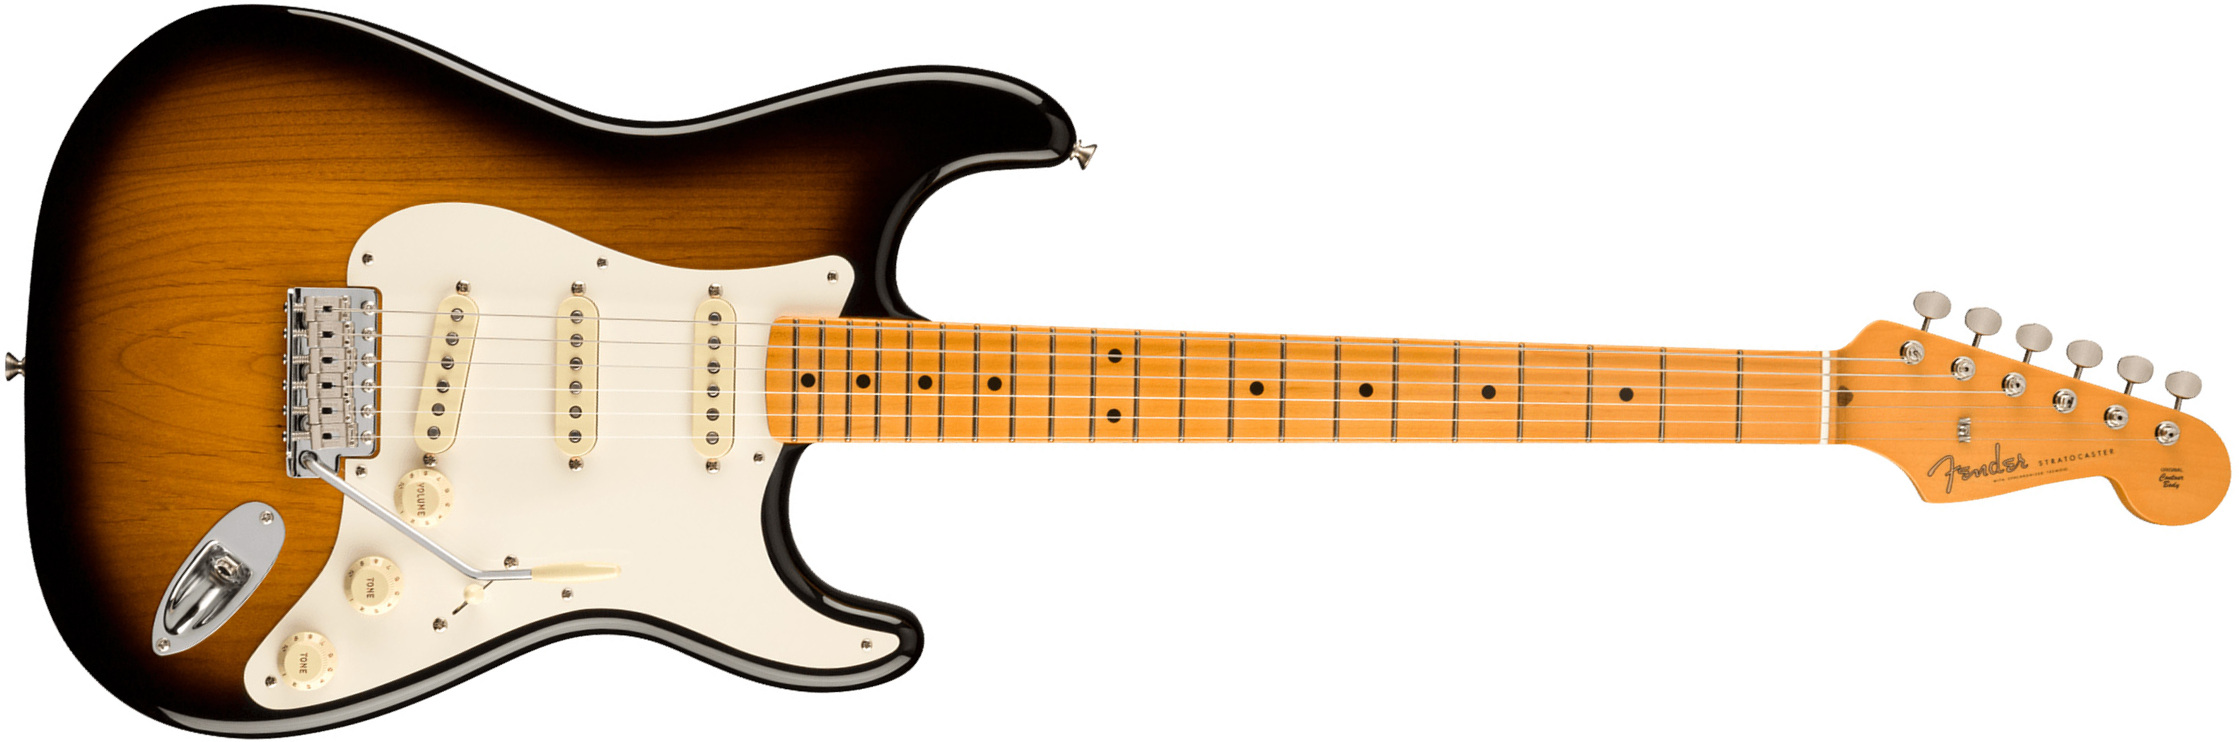 Fender Strat 1957 American Vintage Ii Usa 3s Trem Mn - 2-color Sunburst - Guitarra eléctrica con forma de str. - Main picture